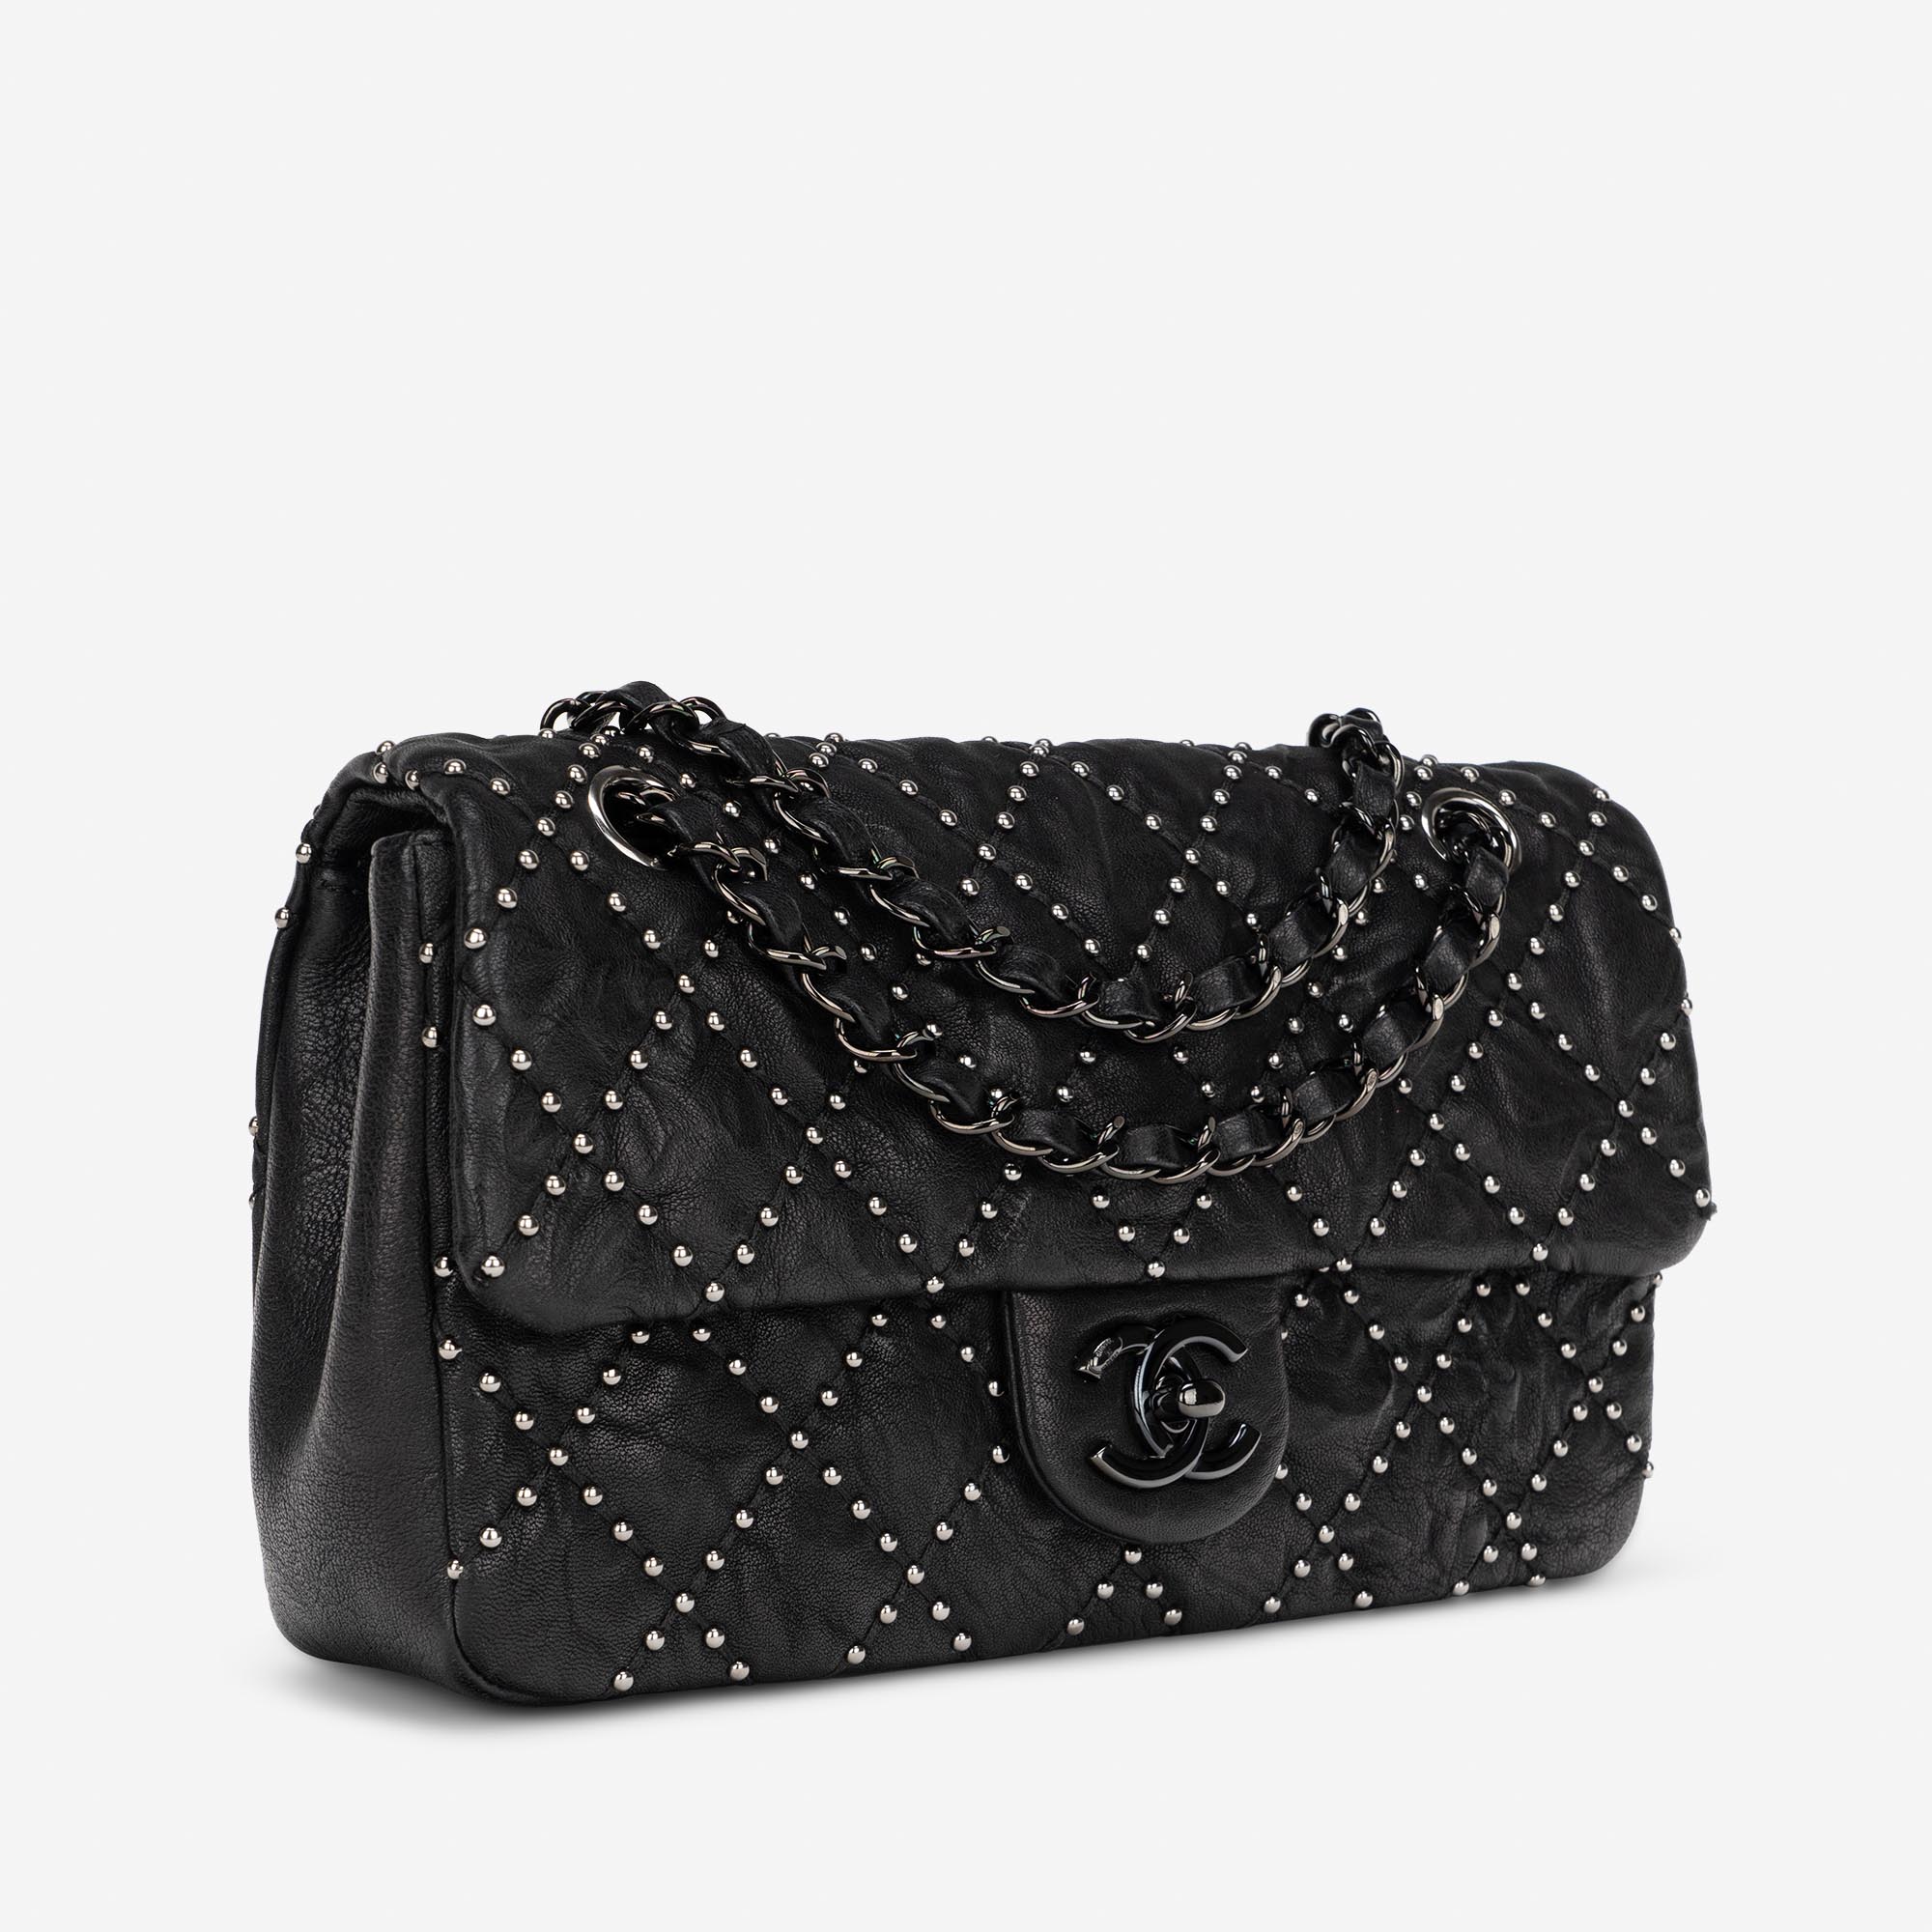 Pre-owned Chanel bag Timeless Medium Chevre So Black Black | Sell your designer bag on Saclab.com